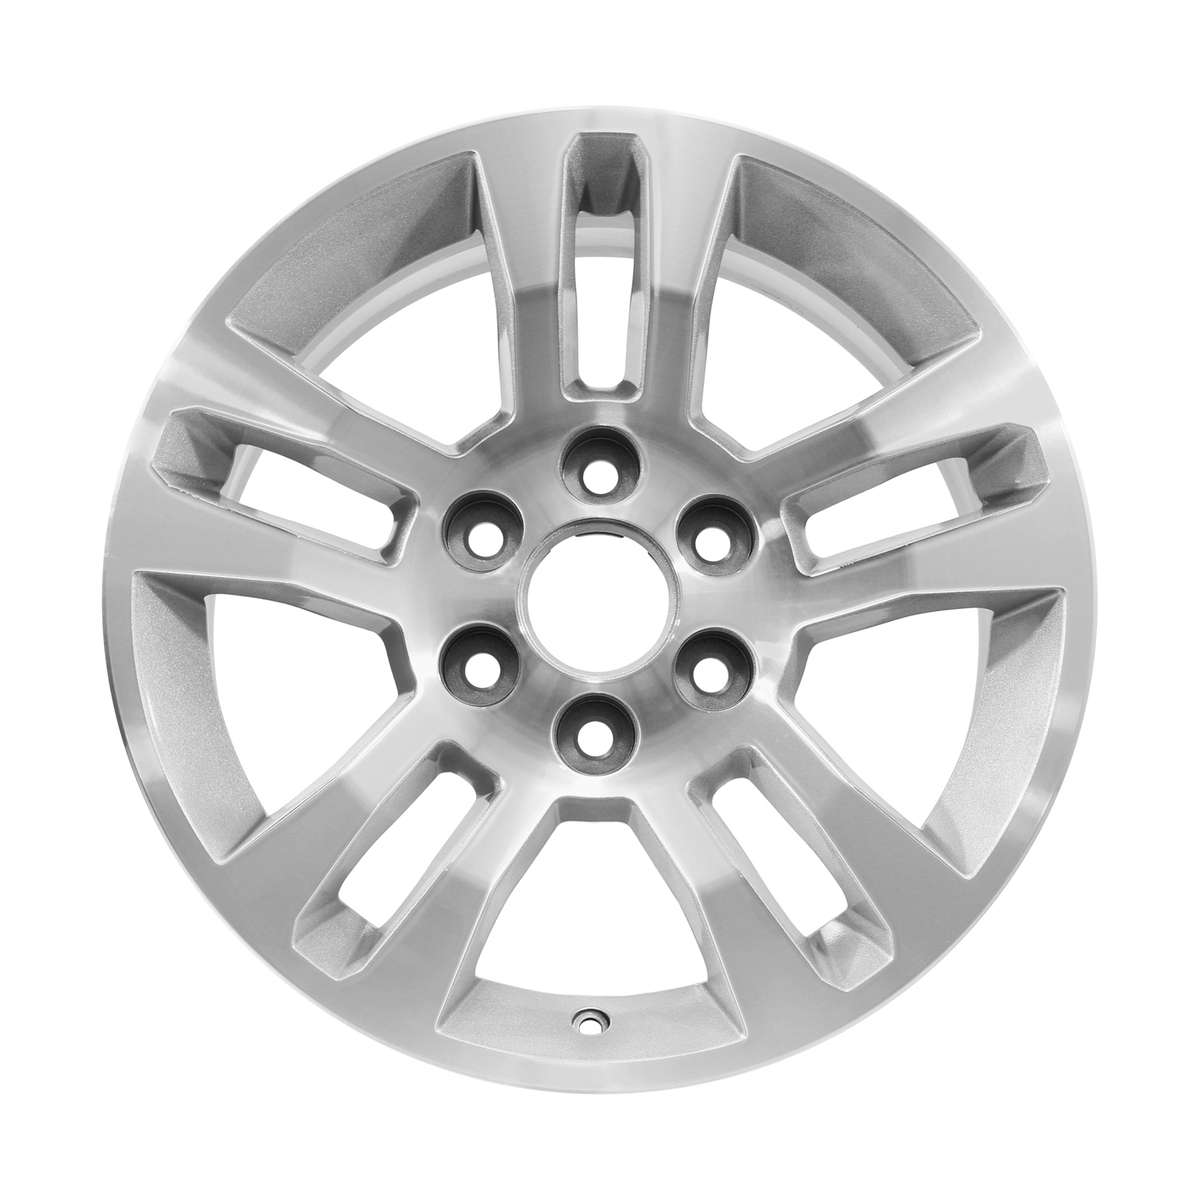 2014 Chevrolet Silverado 1500 New 18" Replacement Wheel Rim RW5646MS